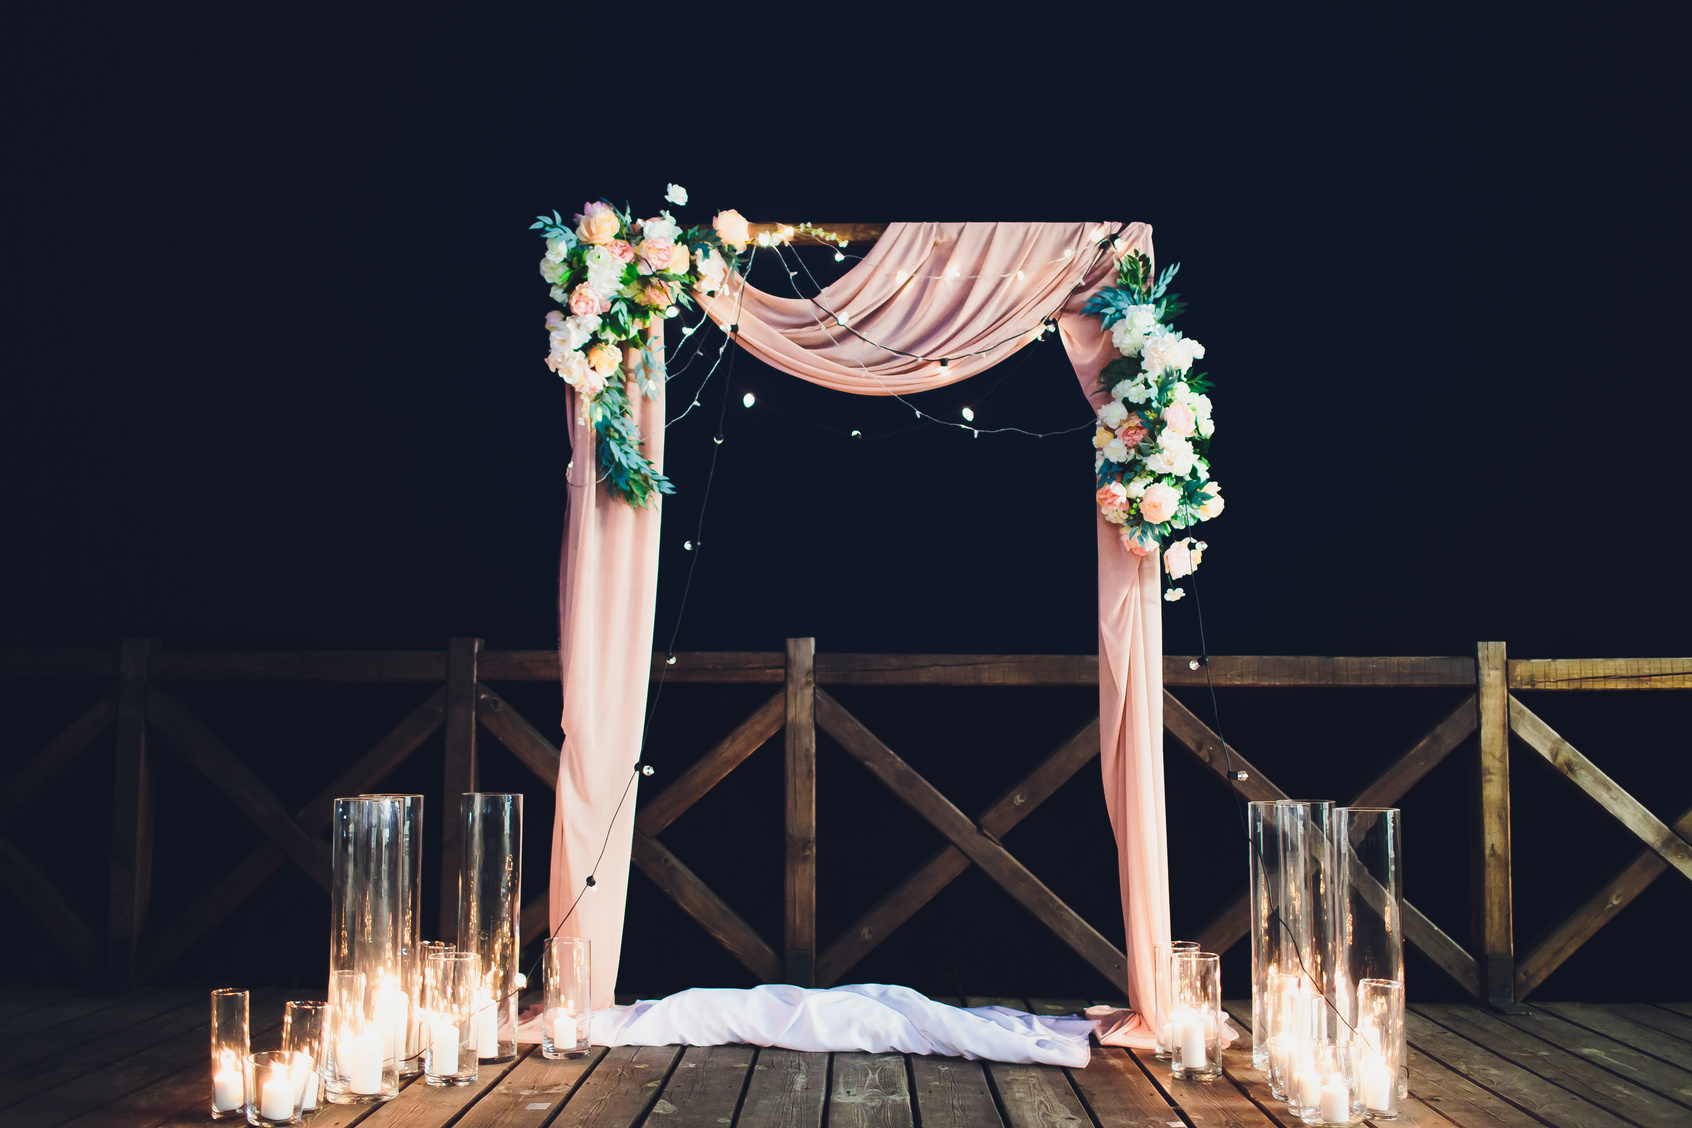 Wedding arch for wedding ceremony. Beautiful wedding decor in rustic style.